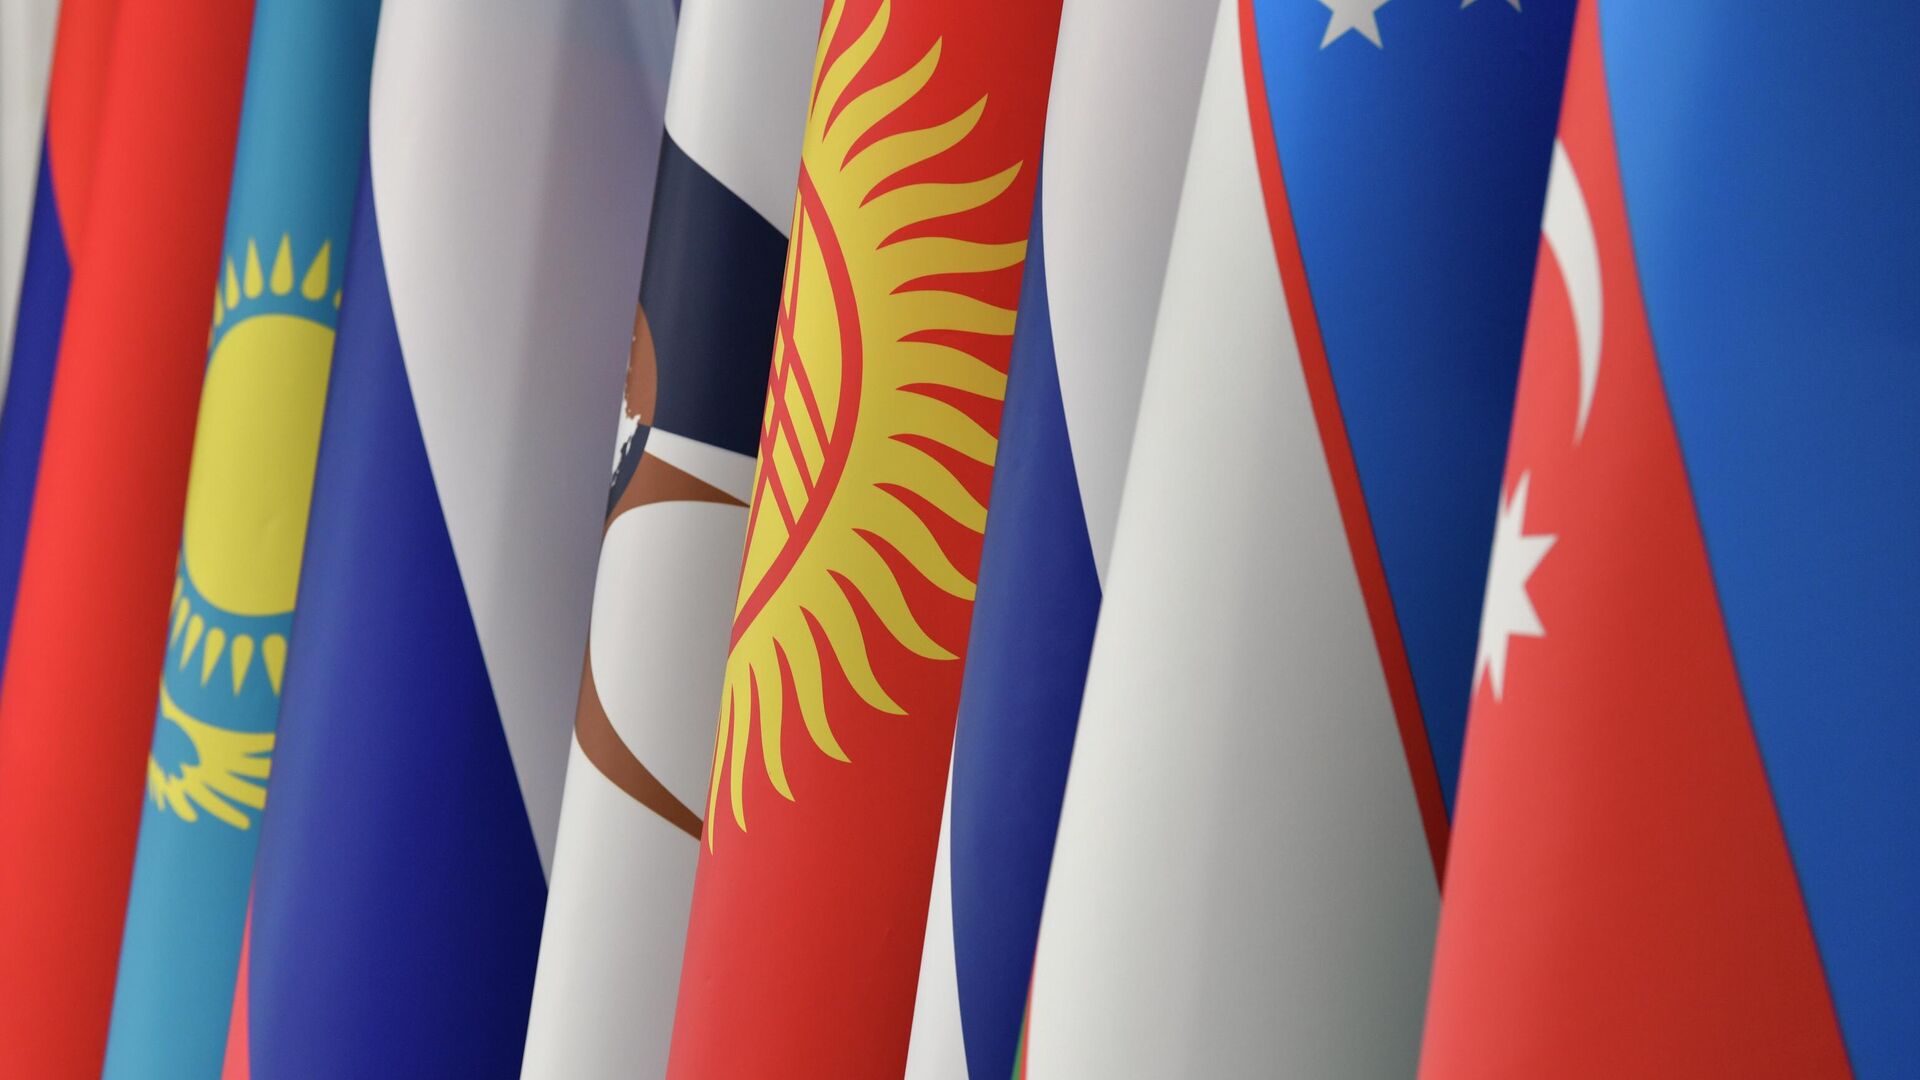 Флаги стран участниц ЕАЭС  - Sputnik Кыргызстан, 1920, 26.08.2022